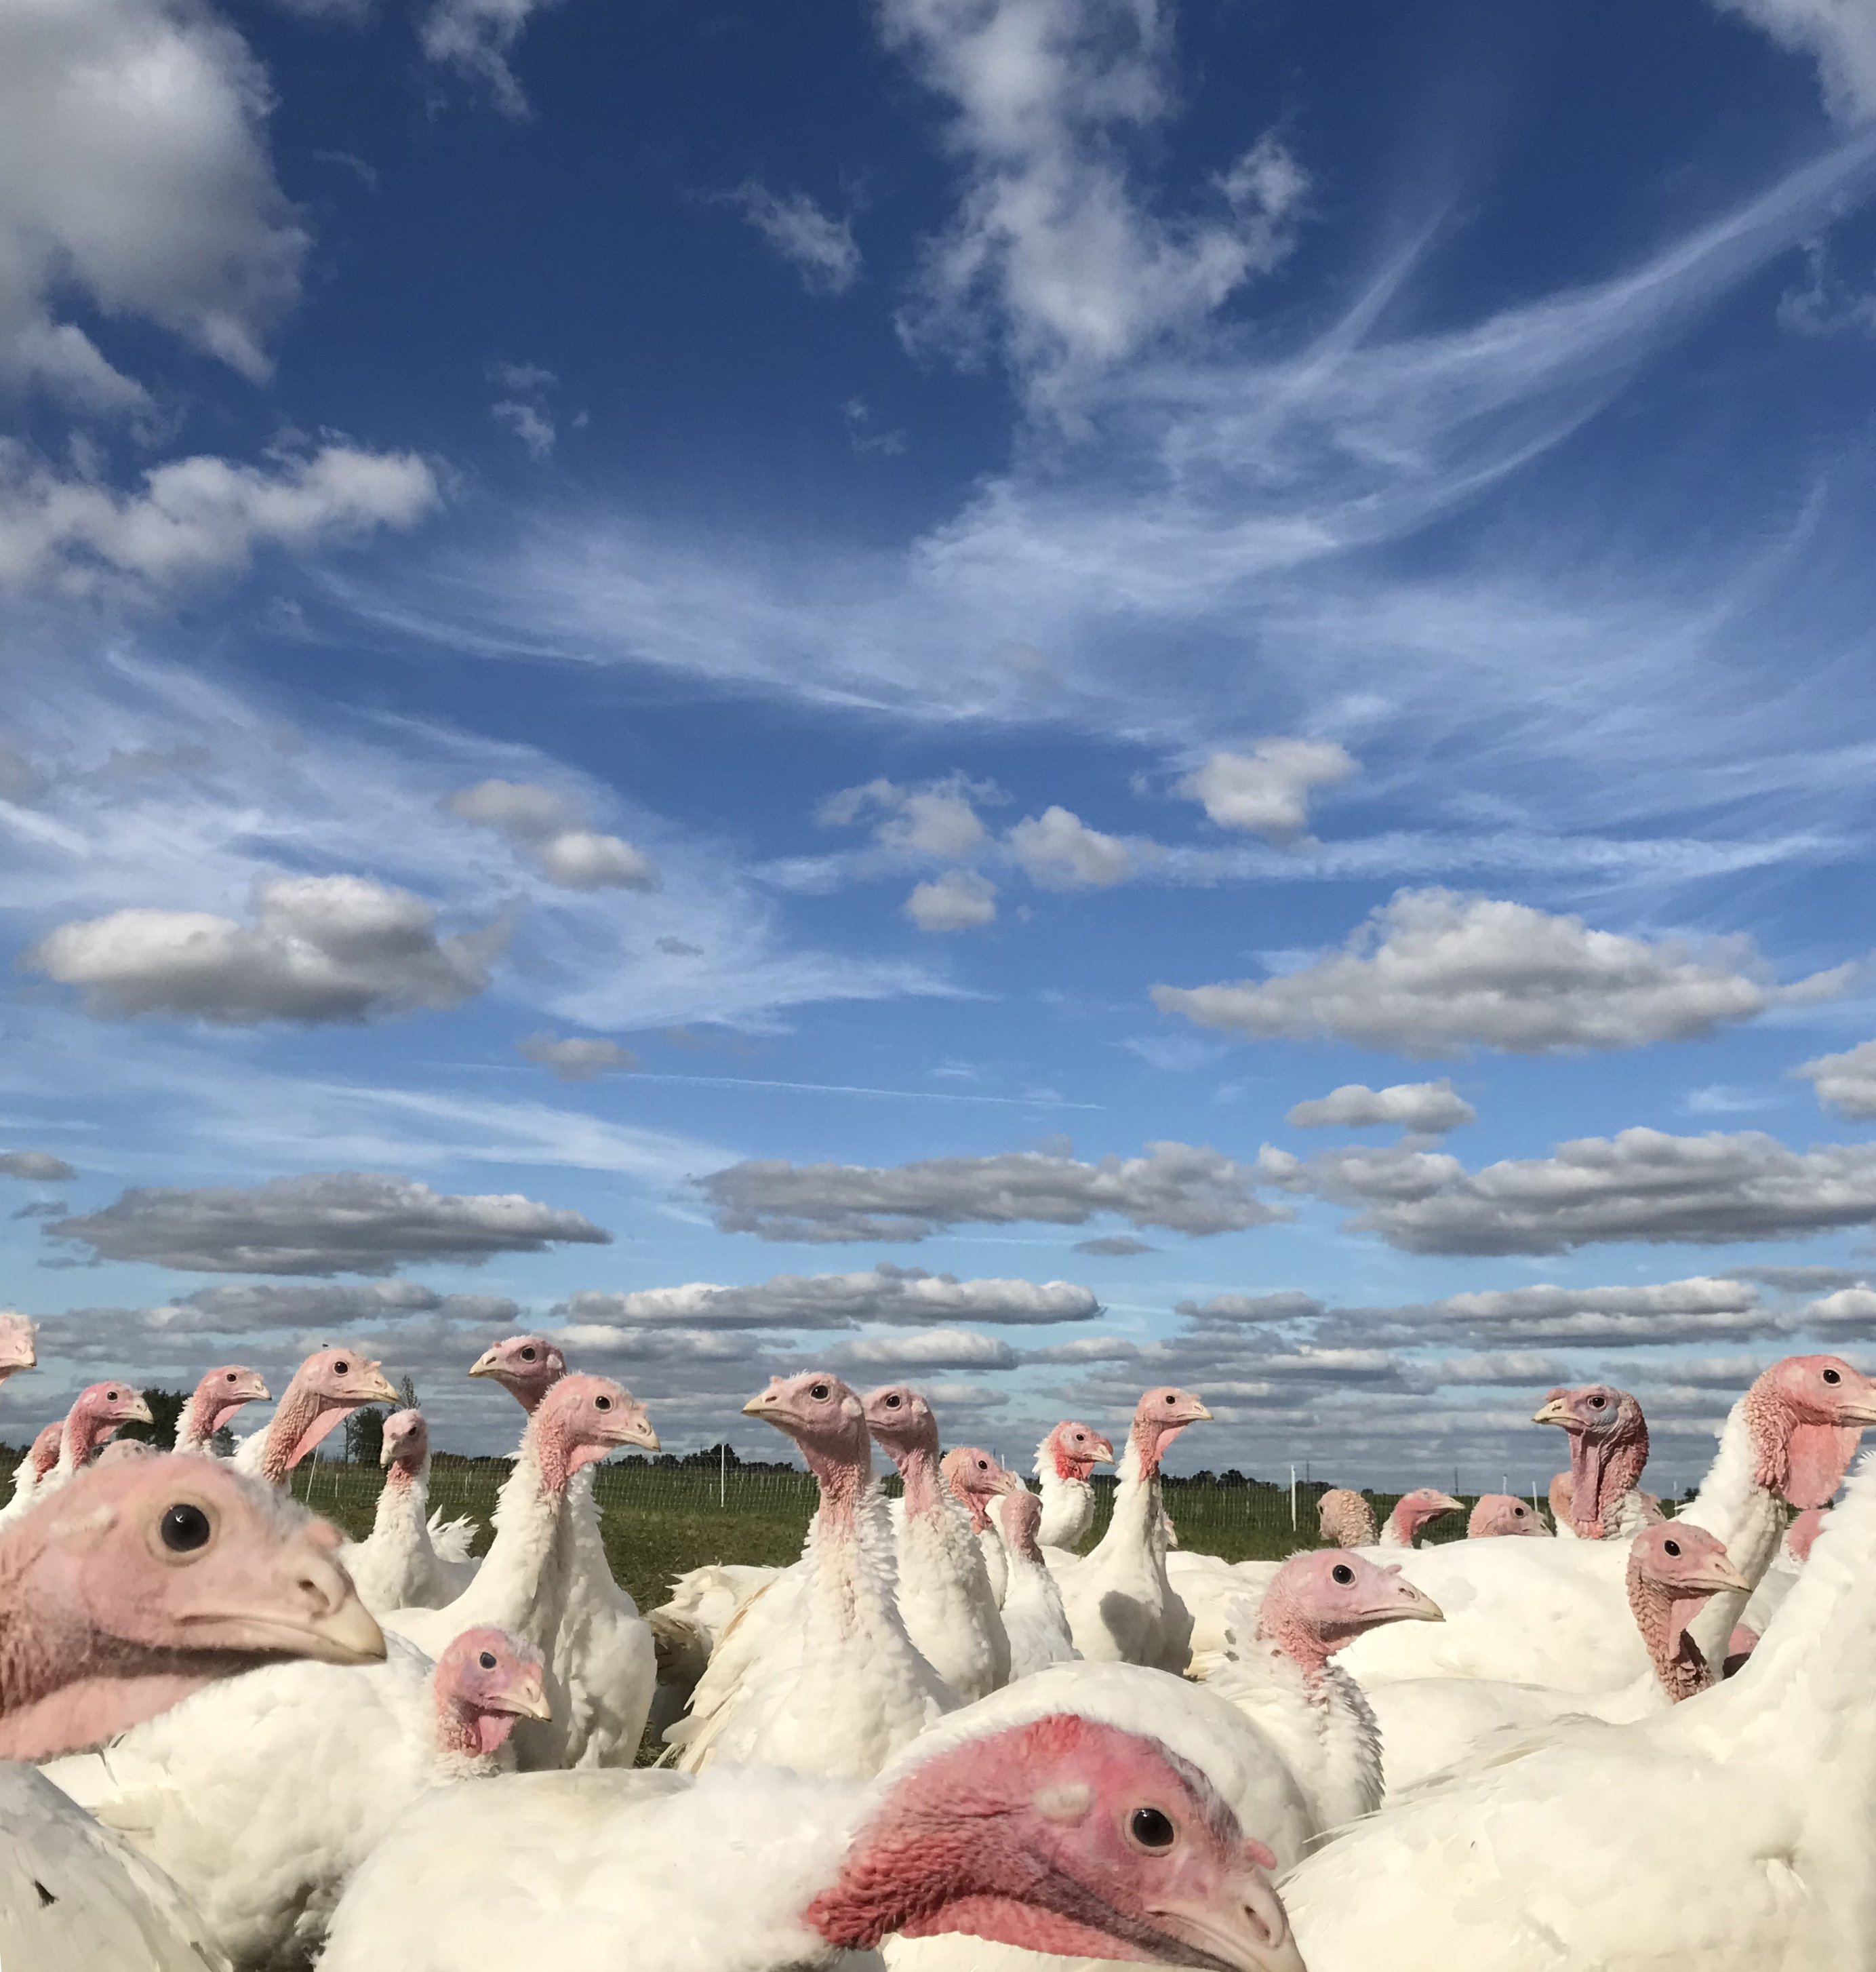 Previous Happening: Farm Photo: Turkeys!